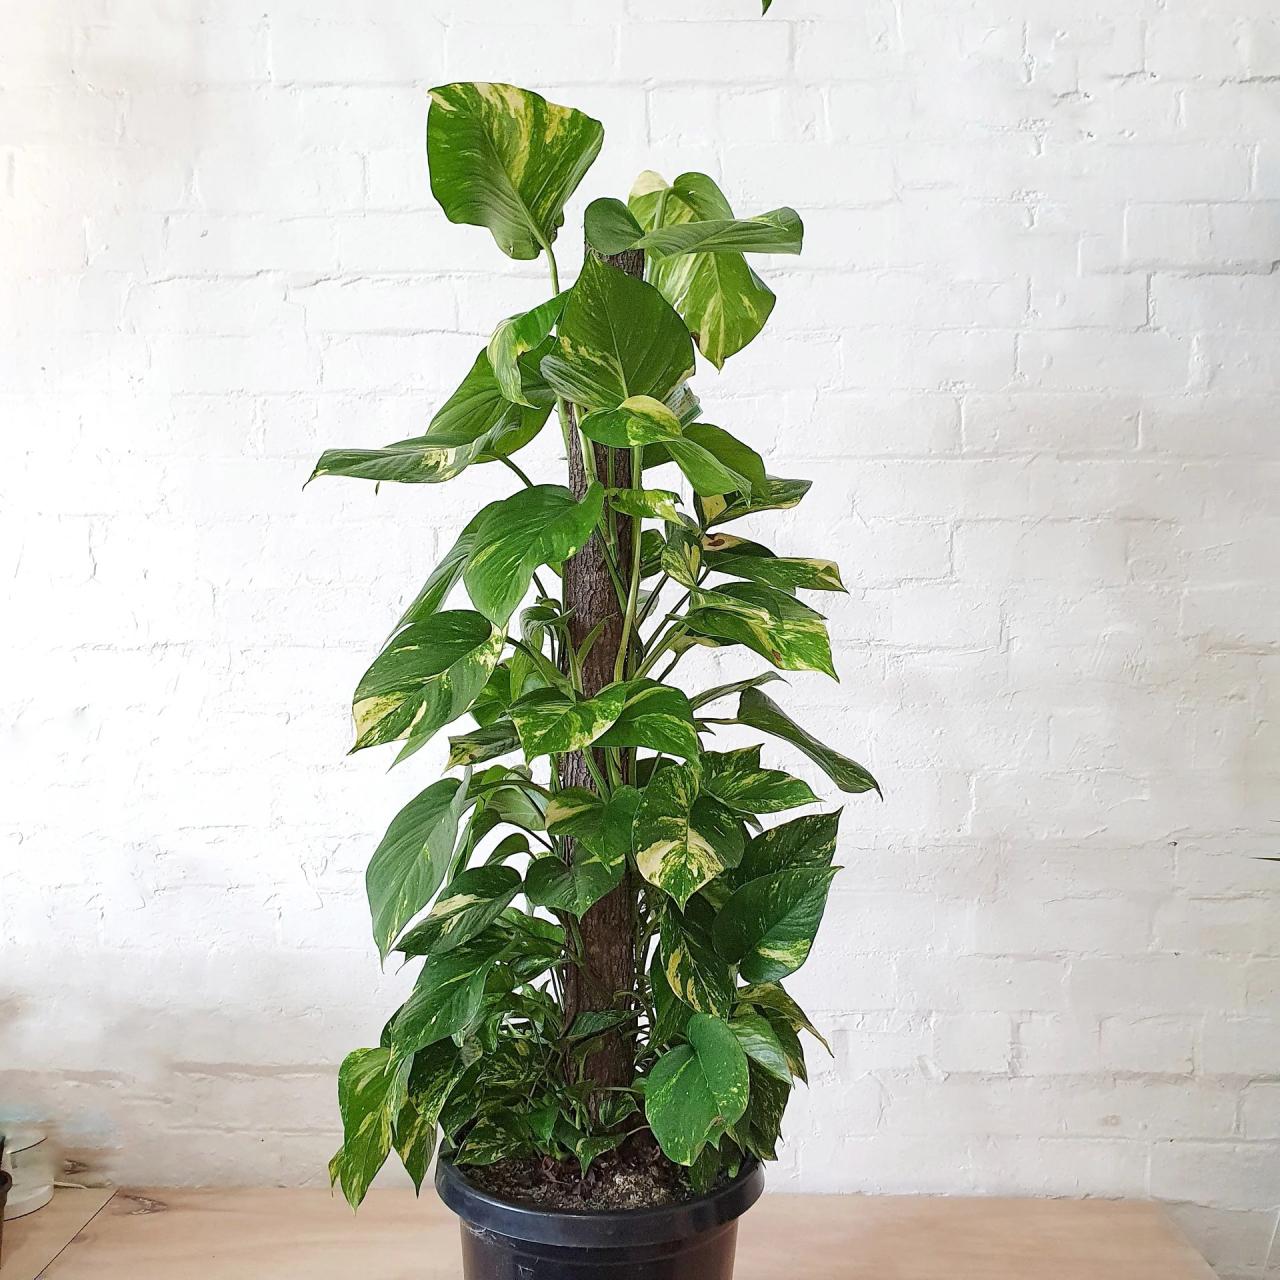 Hanging Plants Indoor | 6 Devils Ivy Trailing Plant: A Versatile and Decorative Houseplant